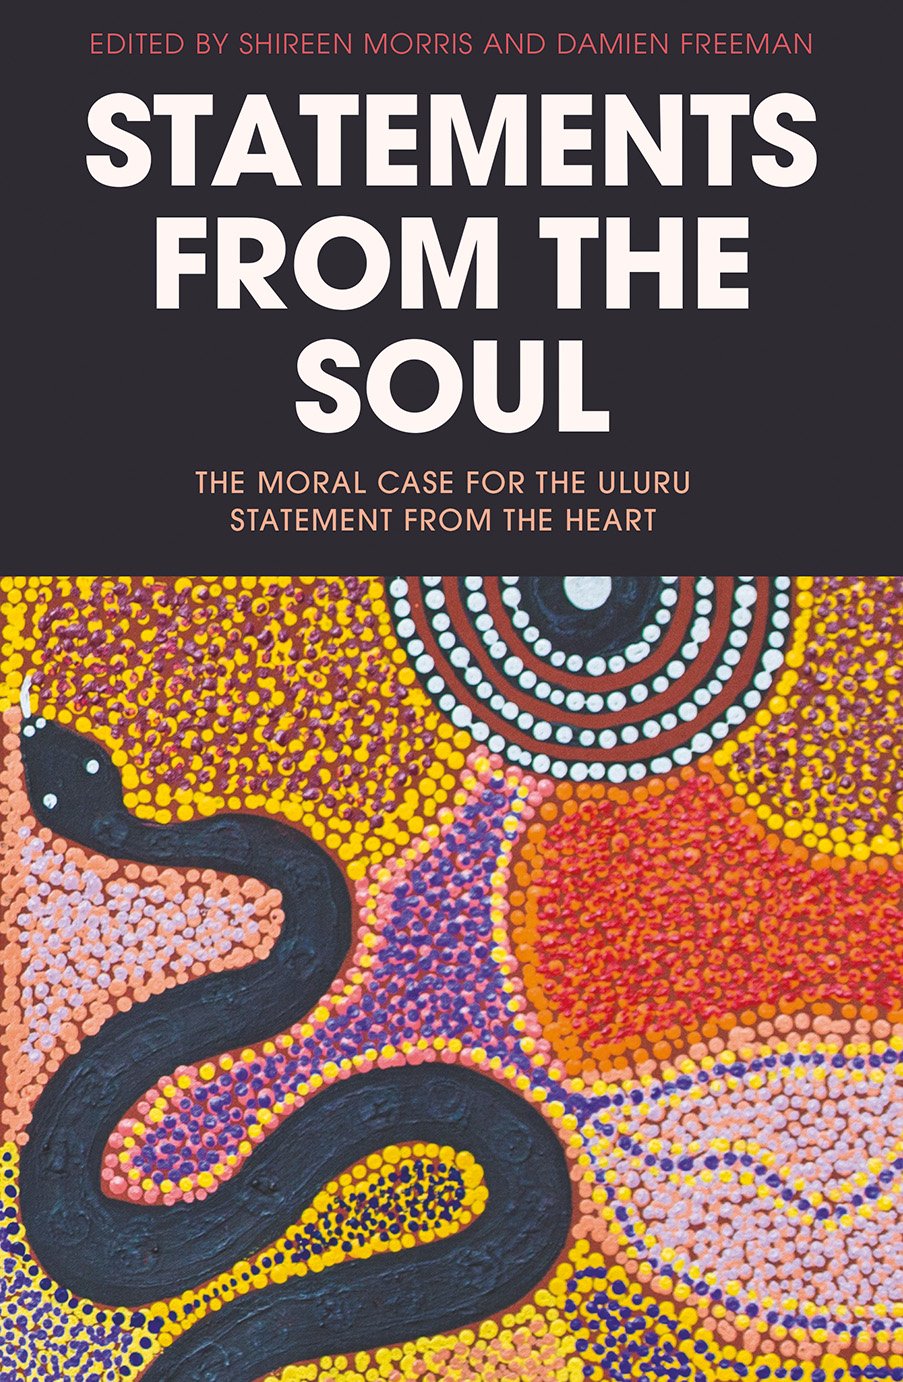 The spiritual case for the Uluru Statement